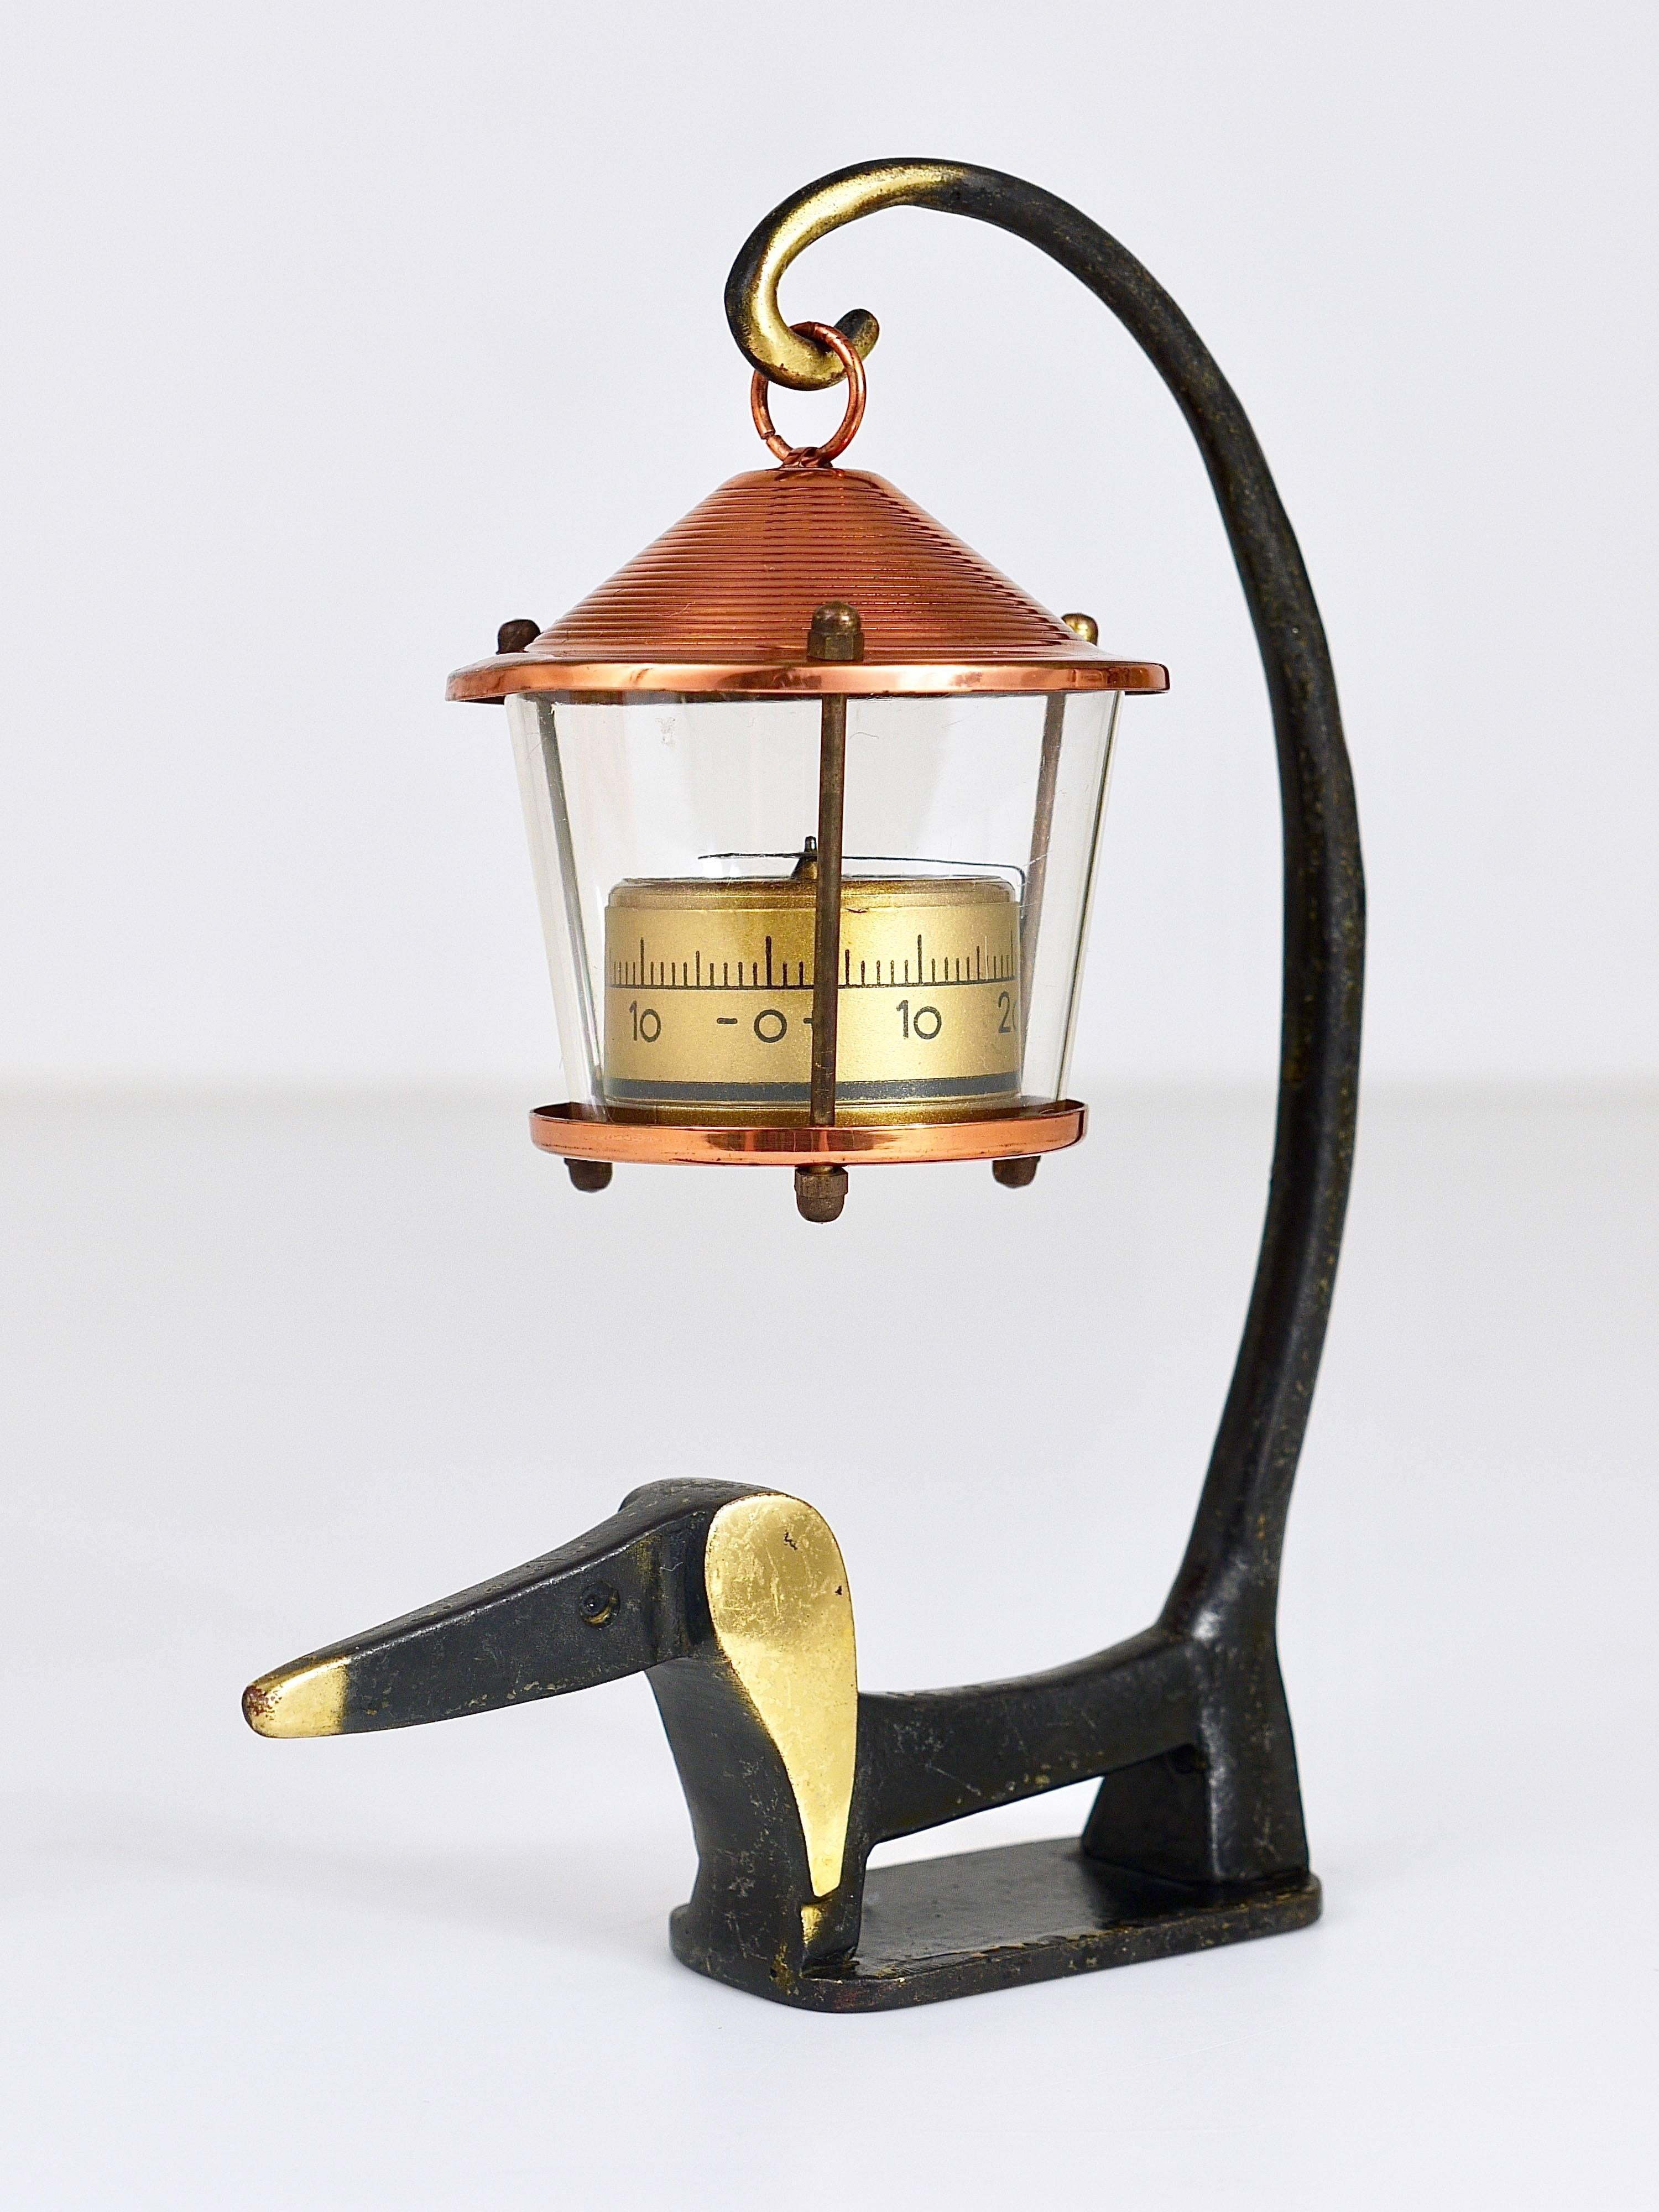 Walter Bosse Wiener Dog Brass Figurine with Lantern Thermometer, Baller, 1950s For Sale 1